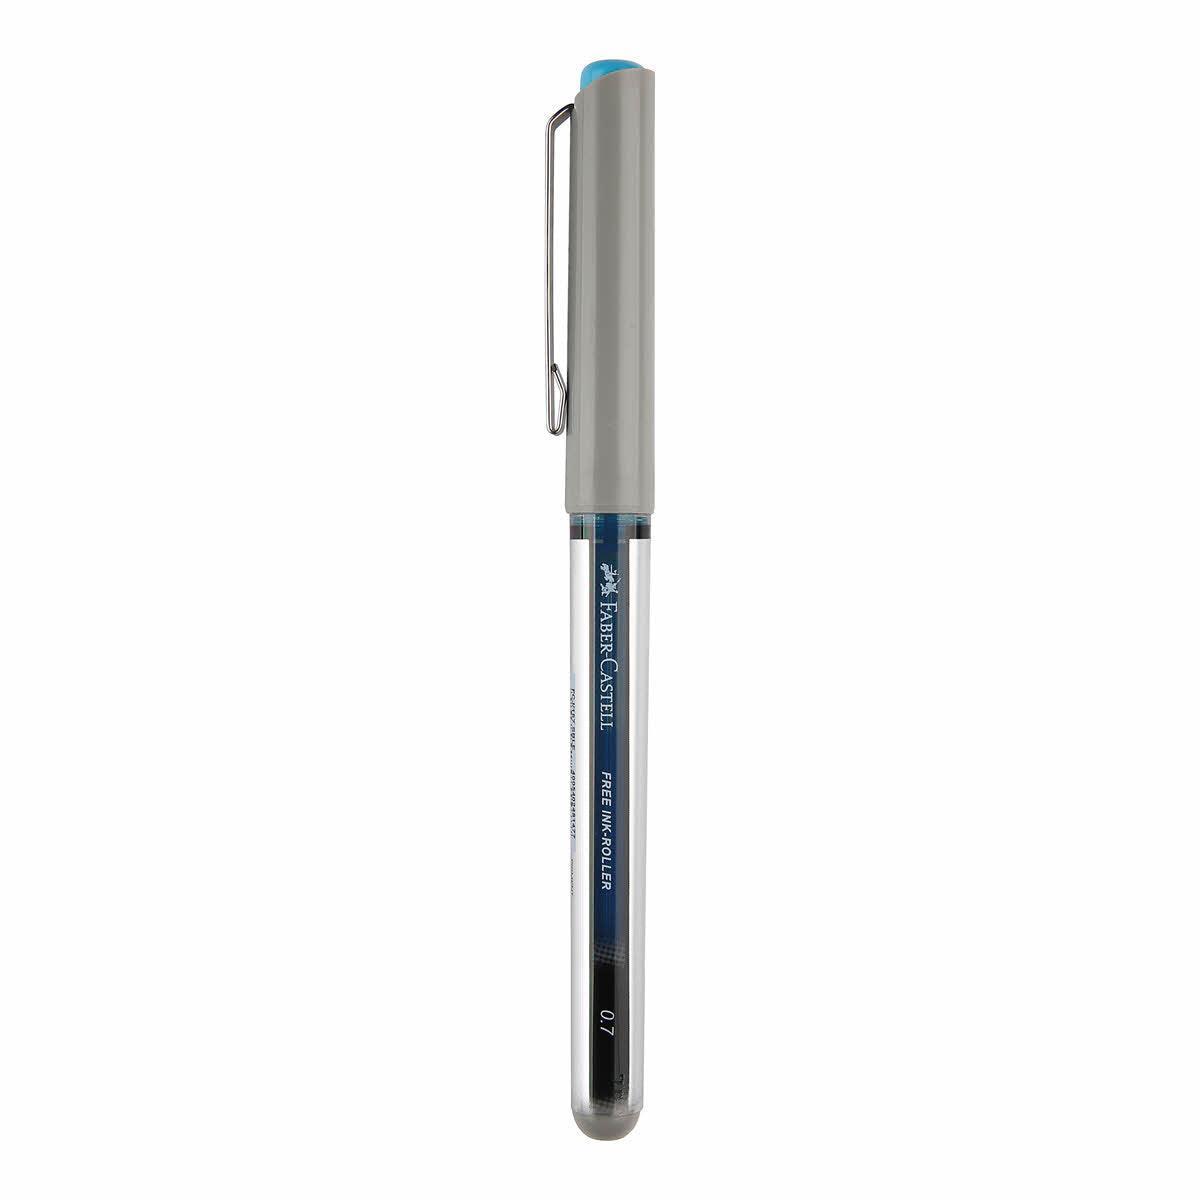 Faber Castell Free Ink Roller 157 0.7mm - Blue / 81477 - Karout Online -Karout Online Shopping In lebanon - Karout Express Delivery 